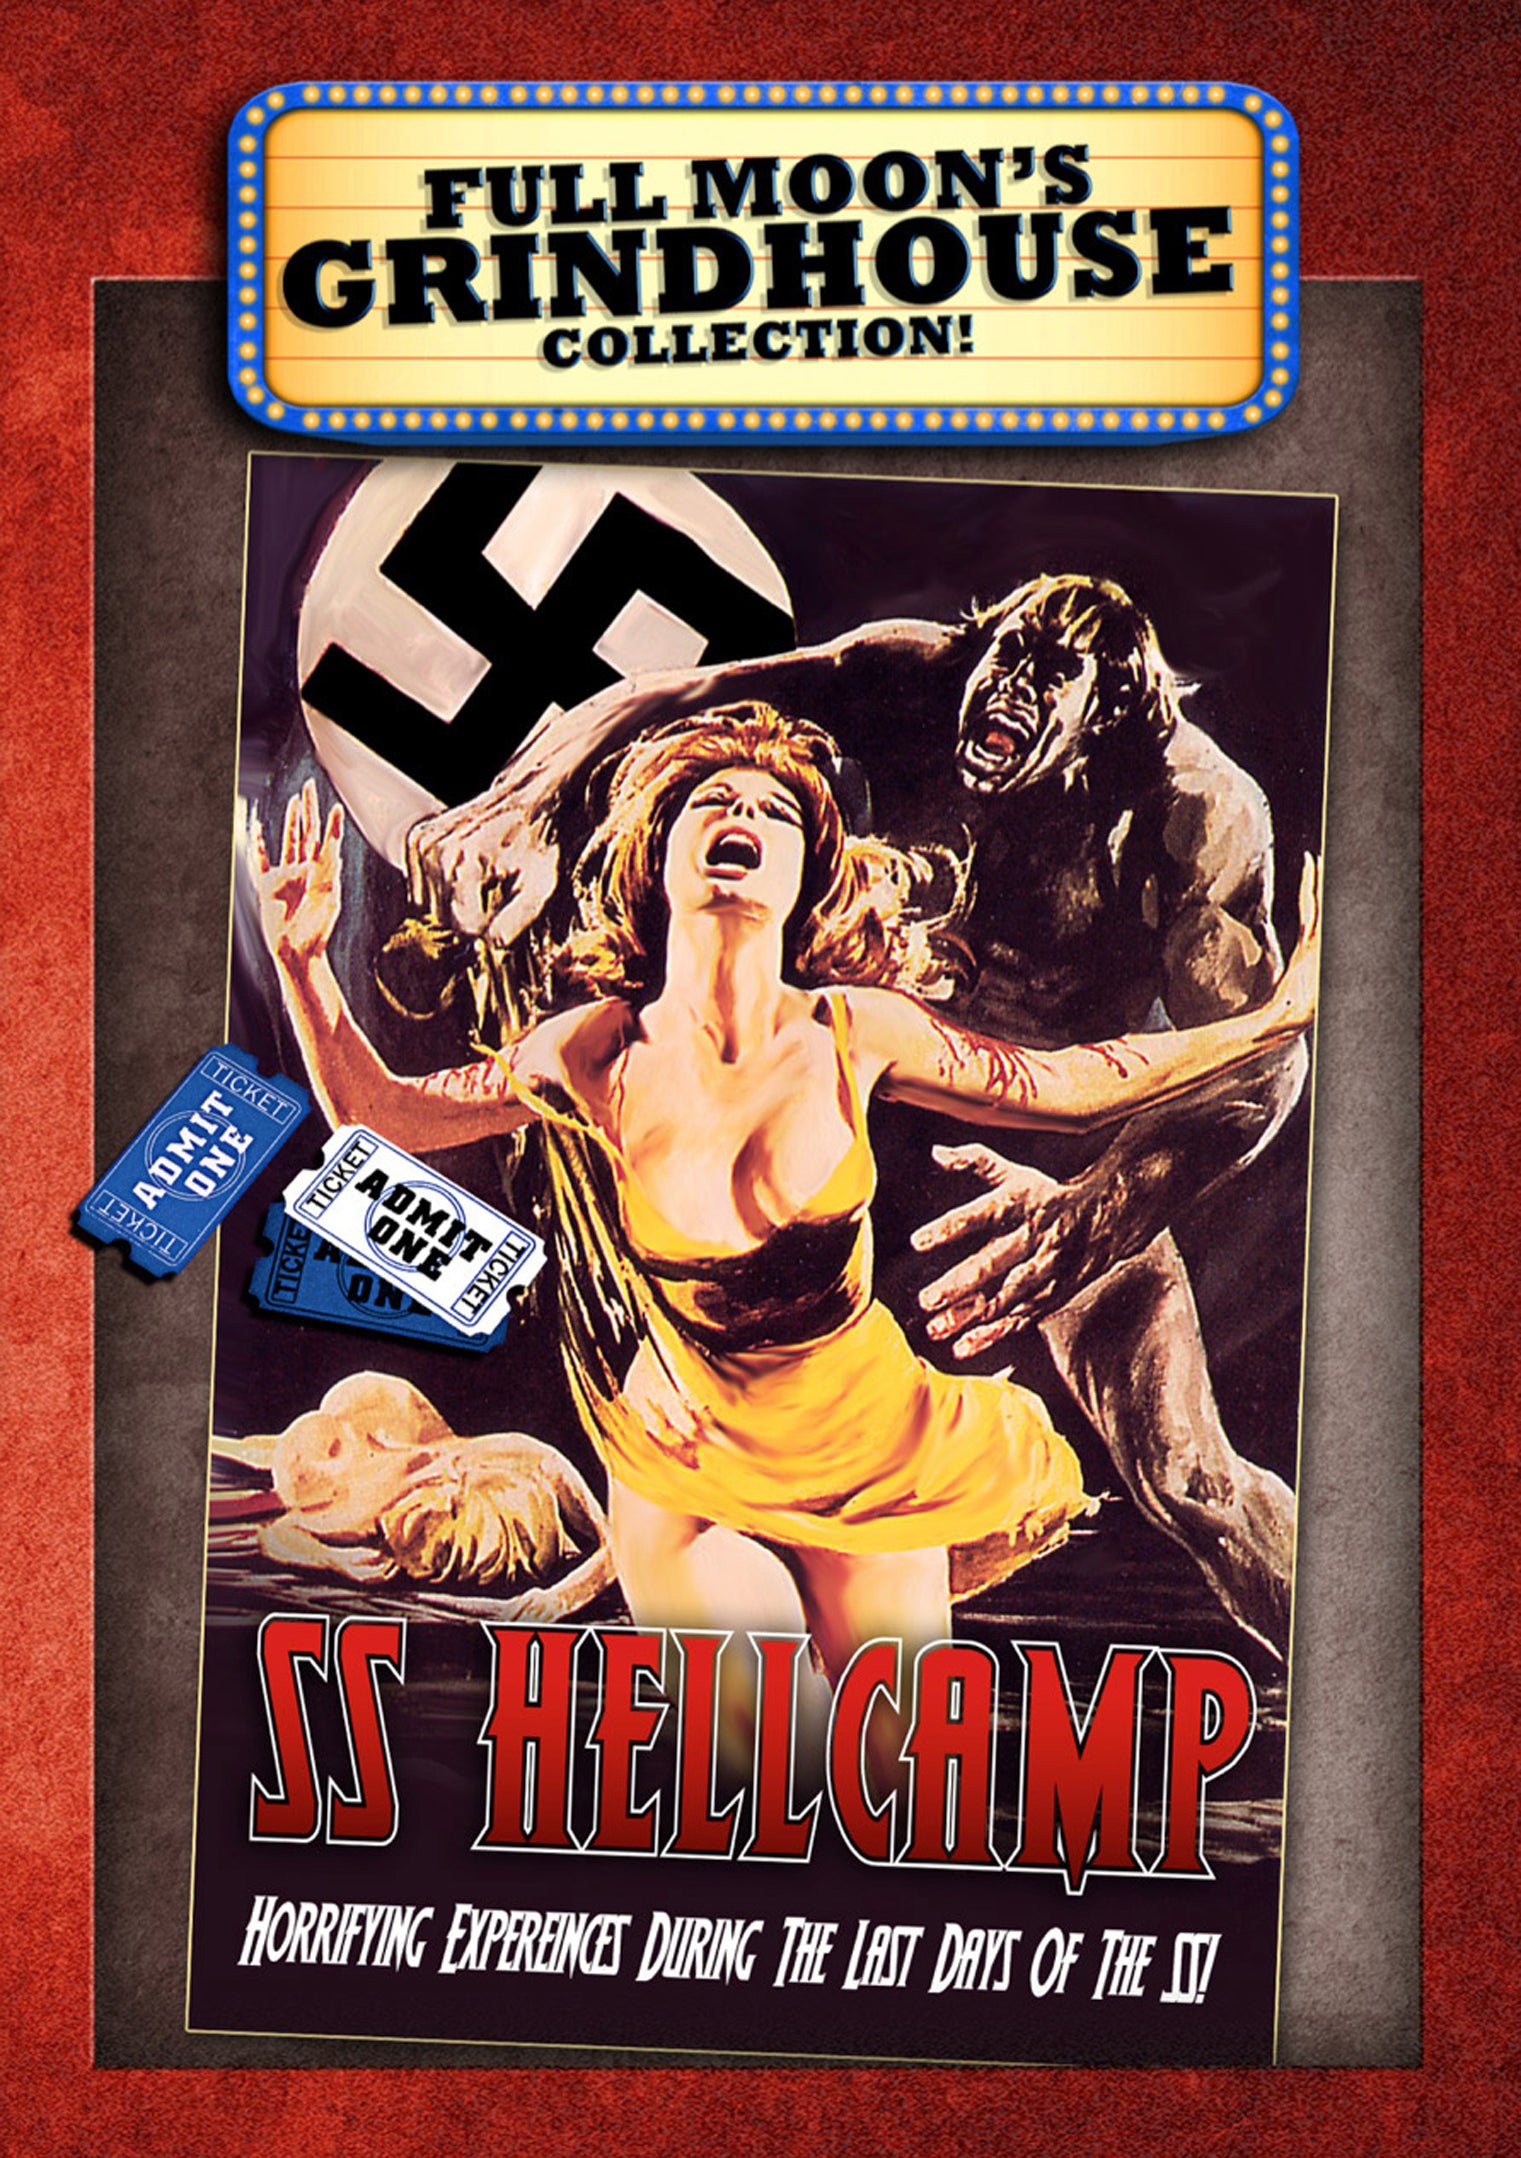 SS HELLCAMP DVD